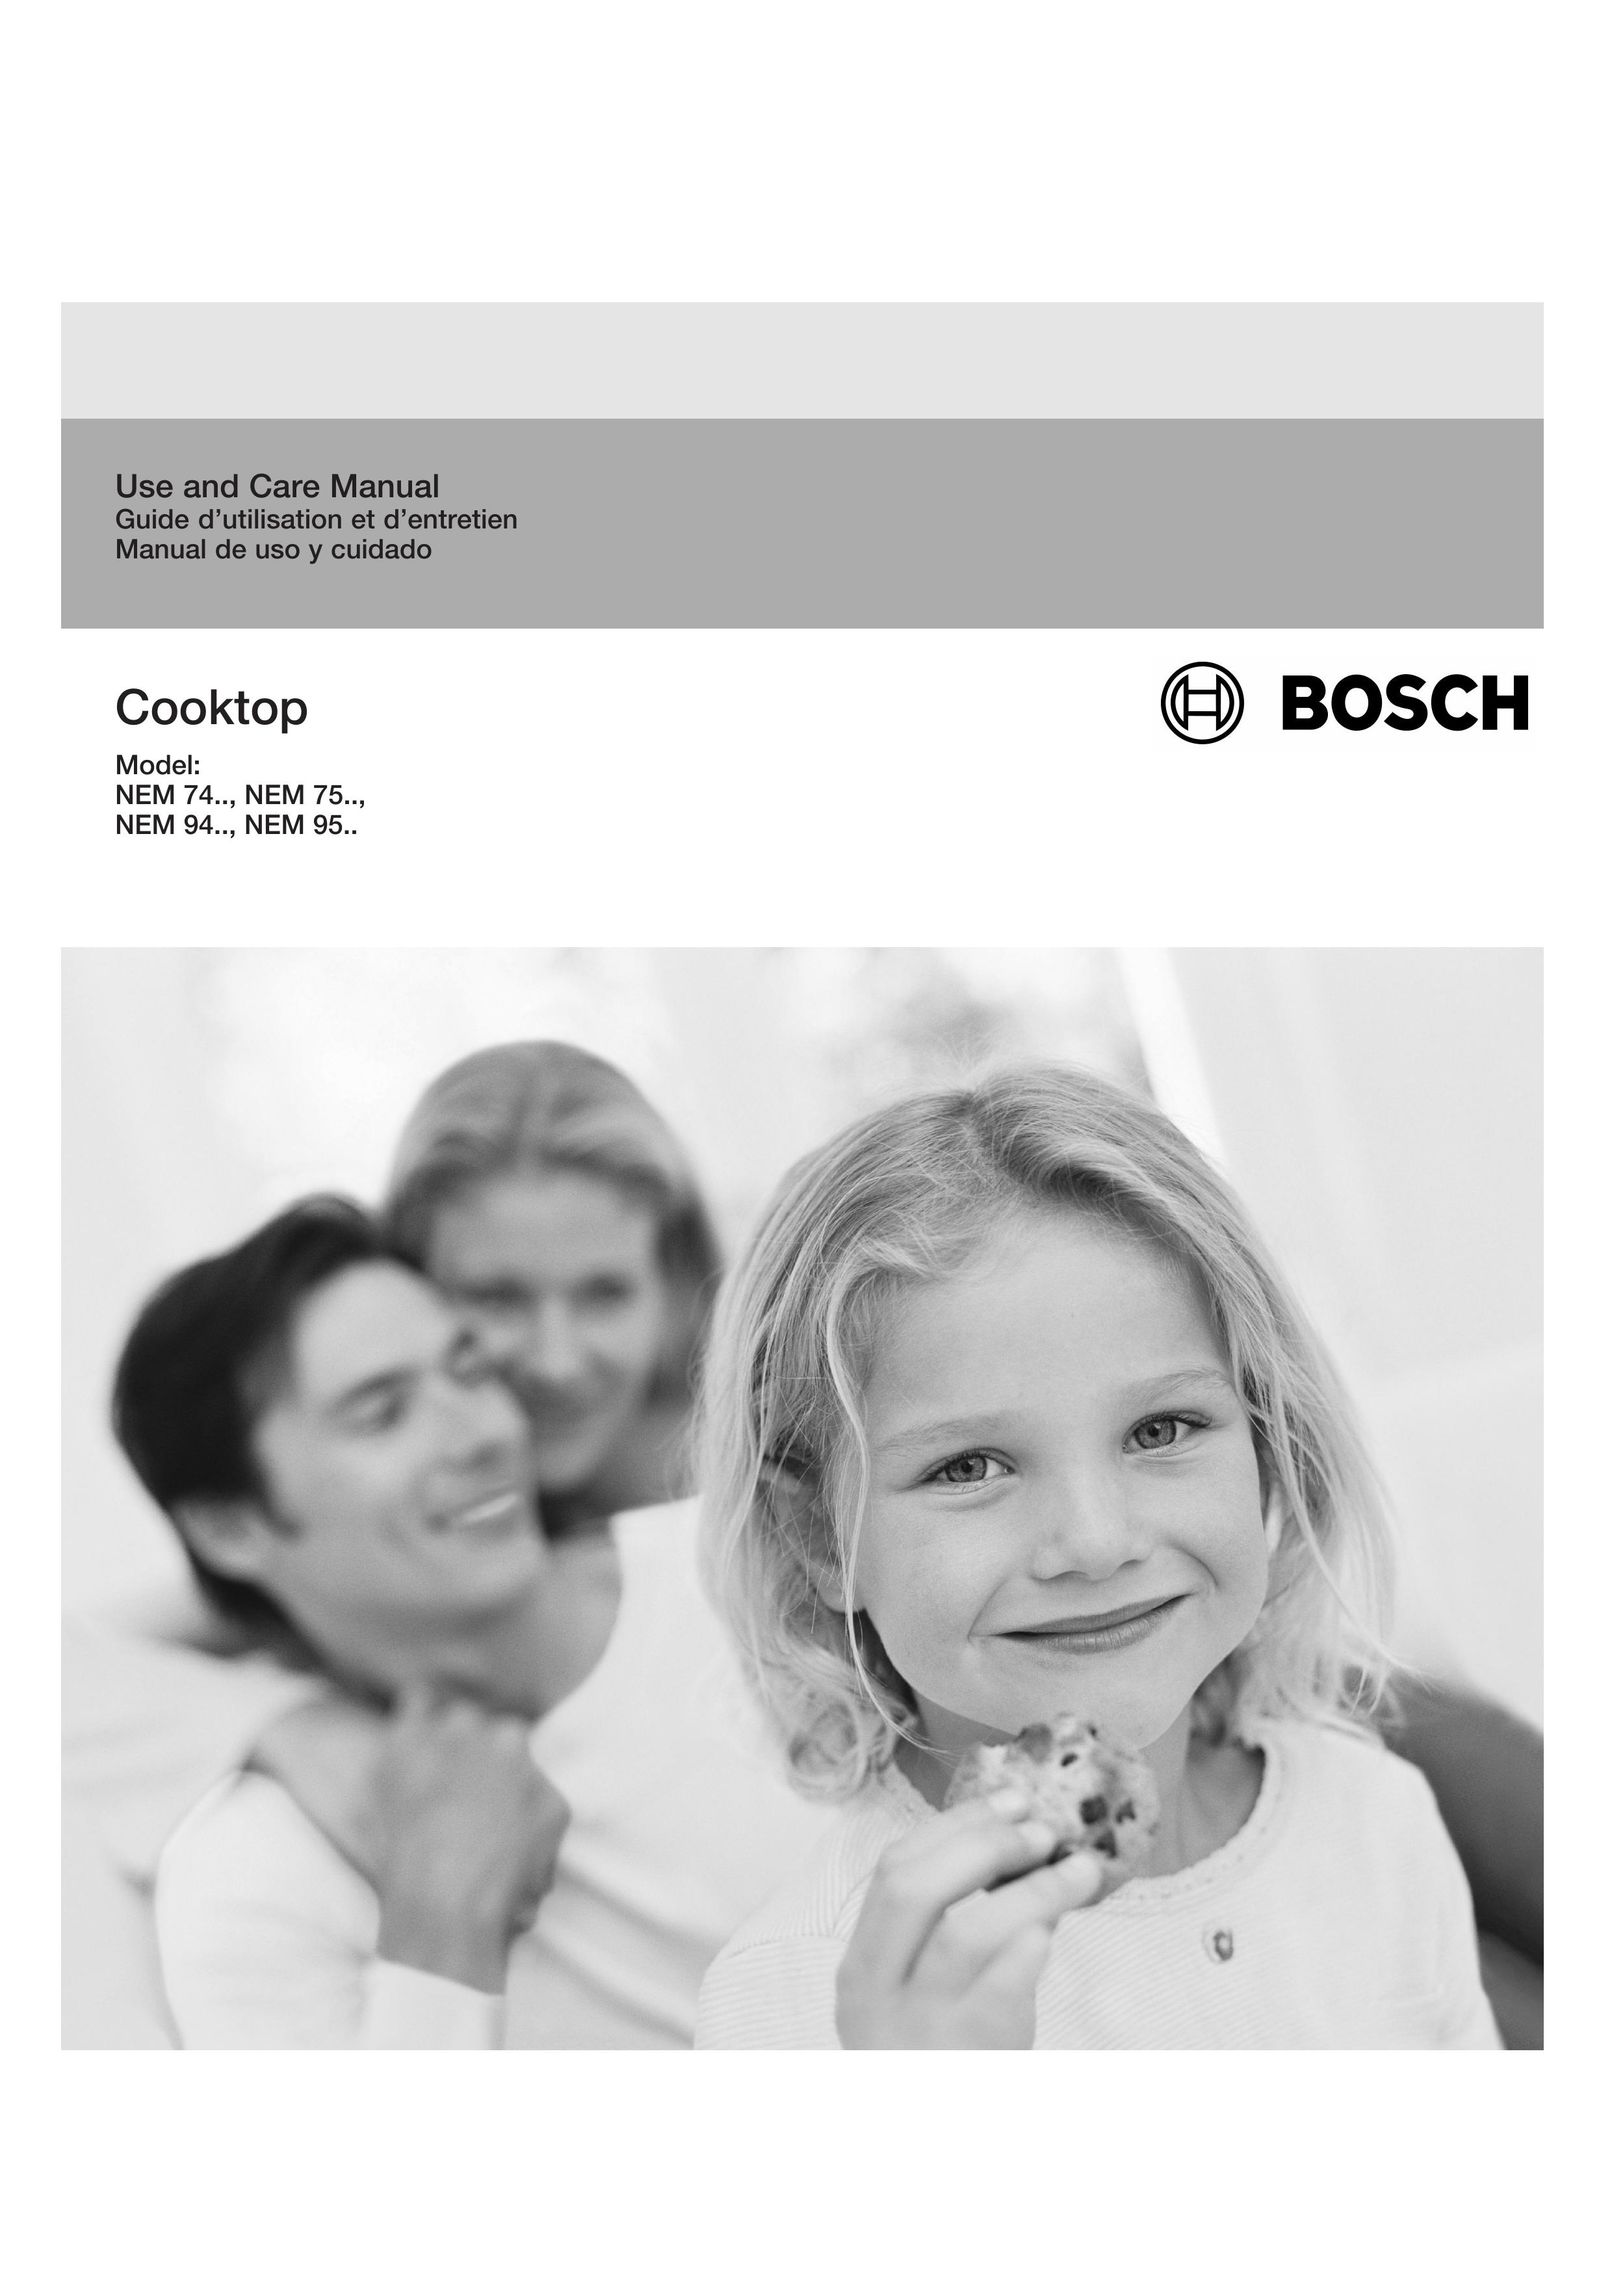 Bosch Appliances NEM 95 Cooktop User Manual